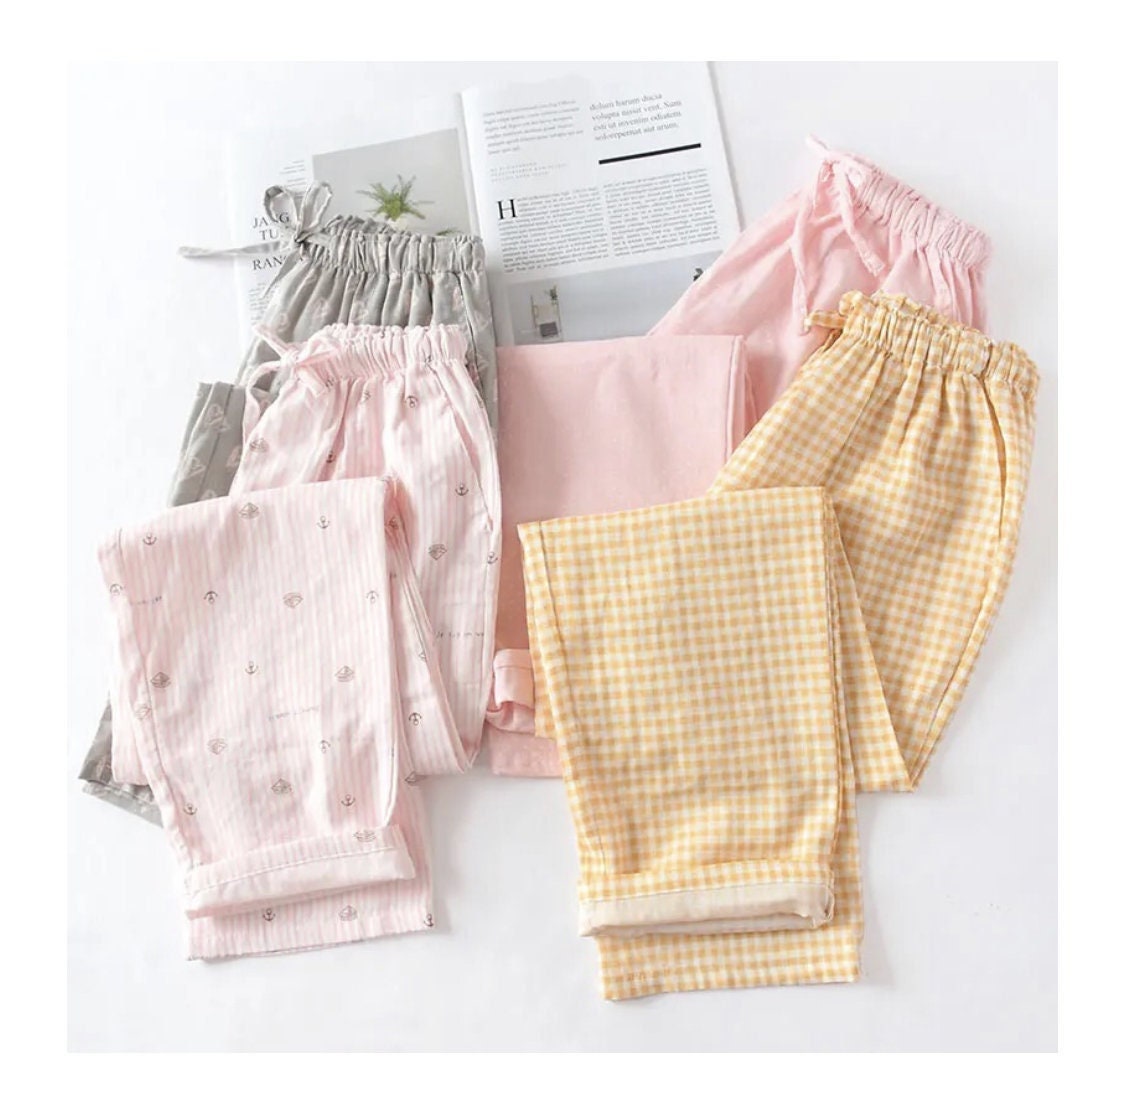 PAJAMA PANTS, COTTON Shorts, Designer Shorts, Japanese Pajamas Shorts, Cute  Pull on Soft Elastic Waist Shorts With Pockets, Shorts for Girls 